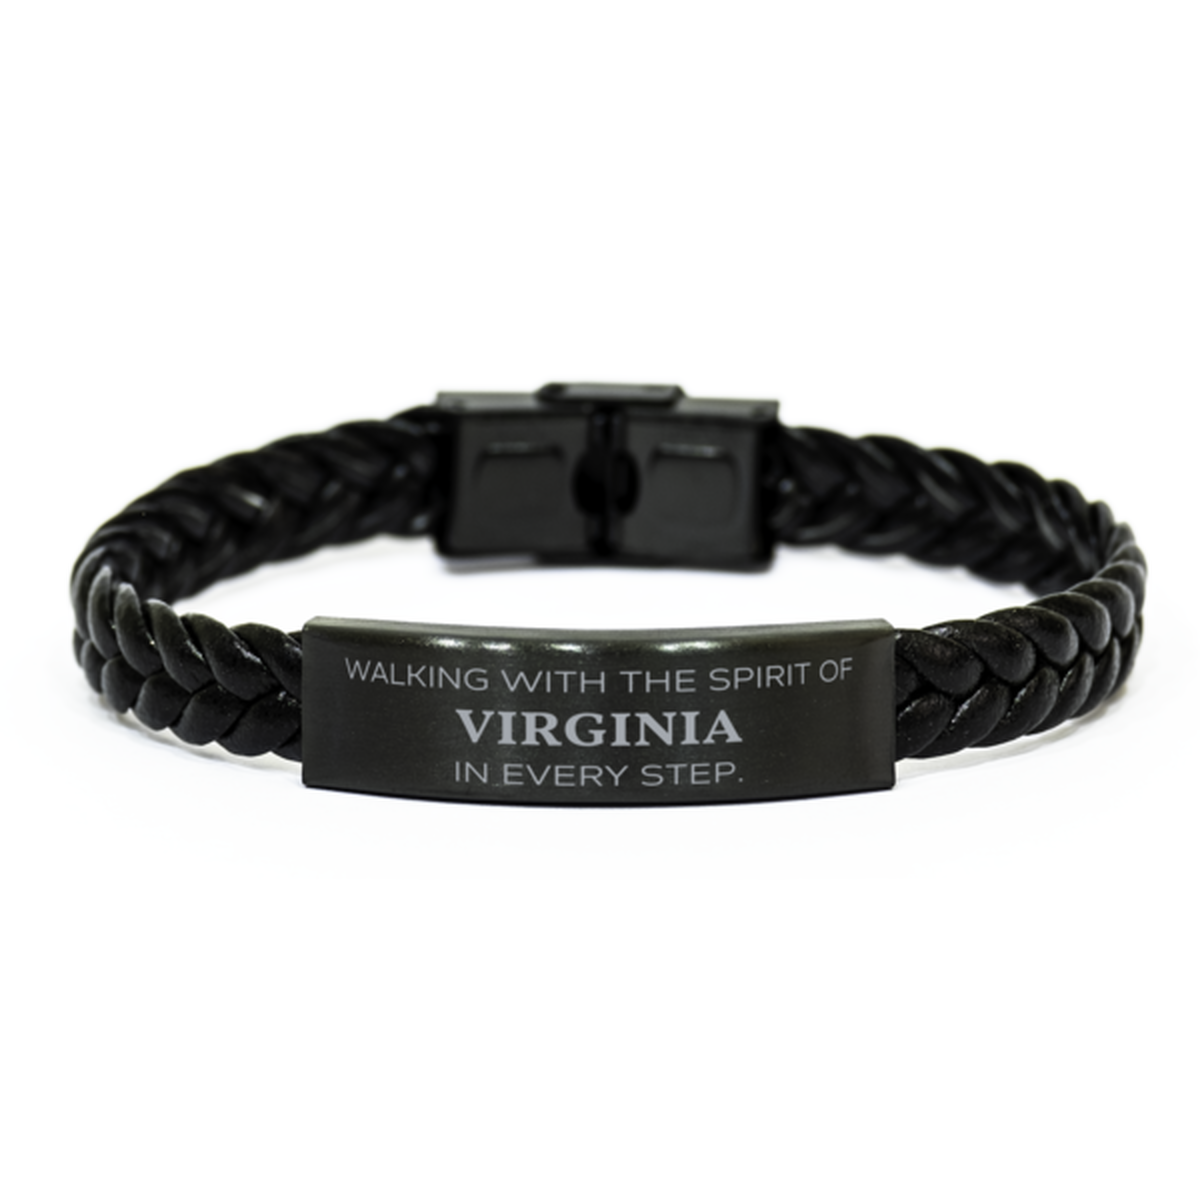 Virginia Gifts, Walking with the spirit, Love Virginia Birthday Christmas Braided Leather Bracelet For Virginia People, Men, Women, Friends